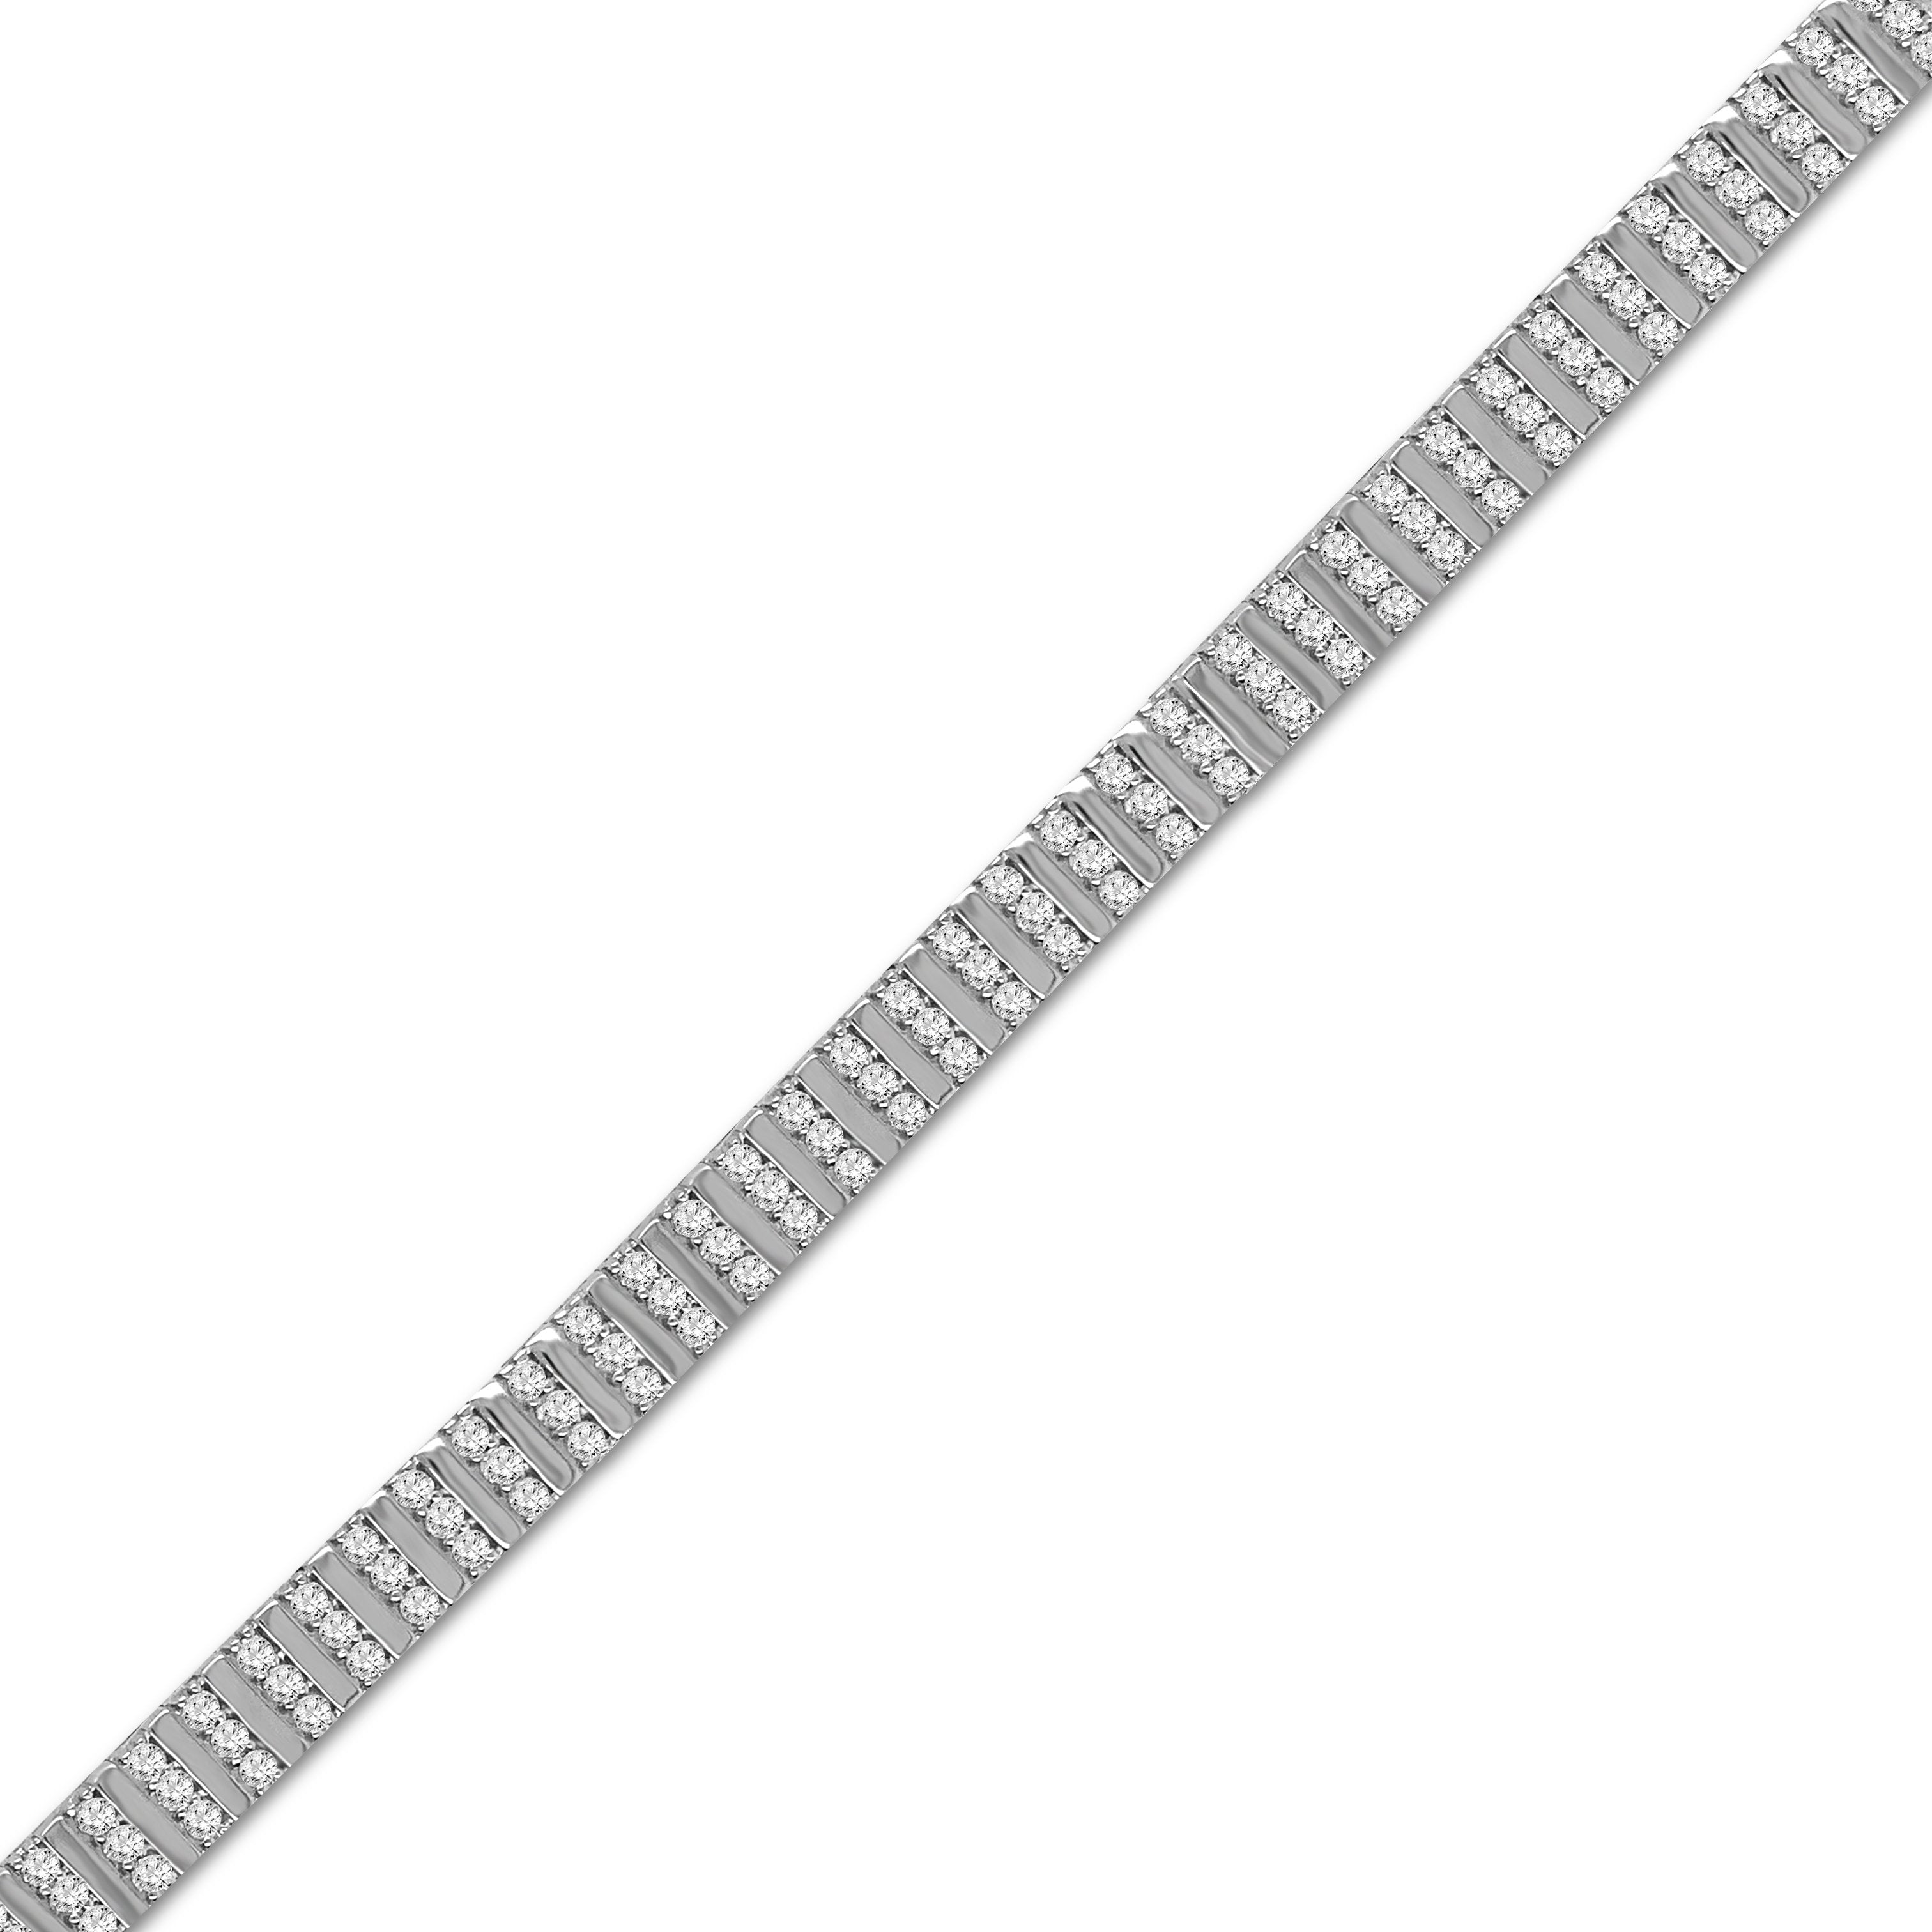 3.00 Carat Diamond Straight Line Bracelet in 10K White Gold - 7.25"